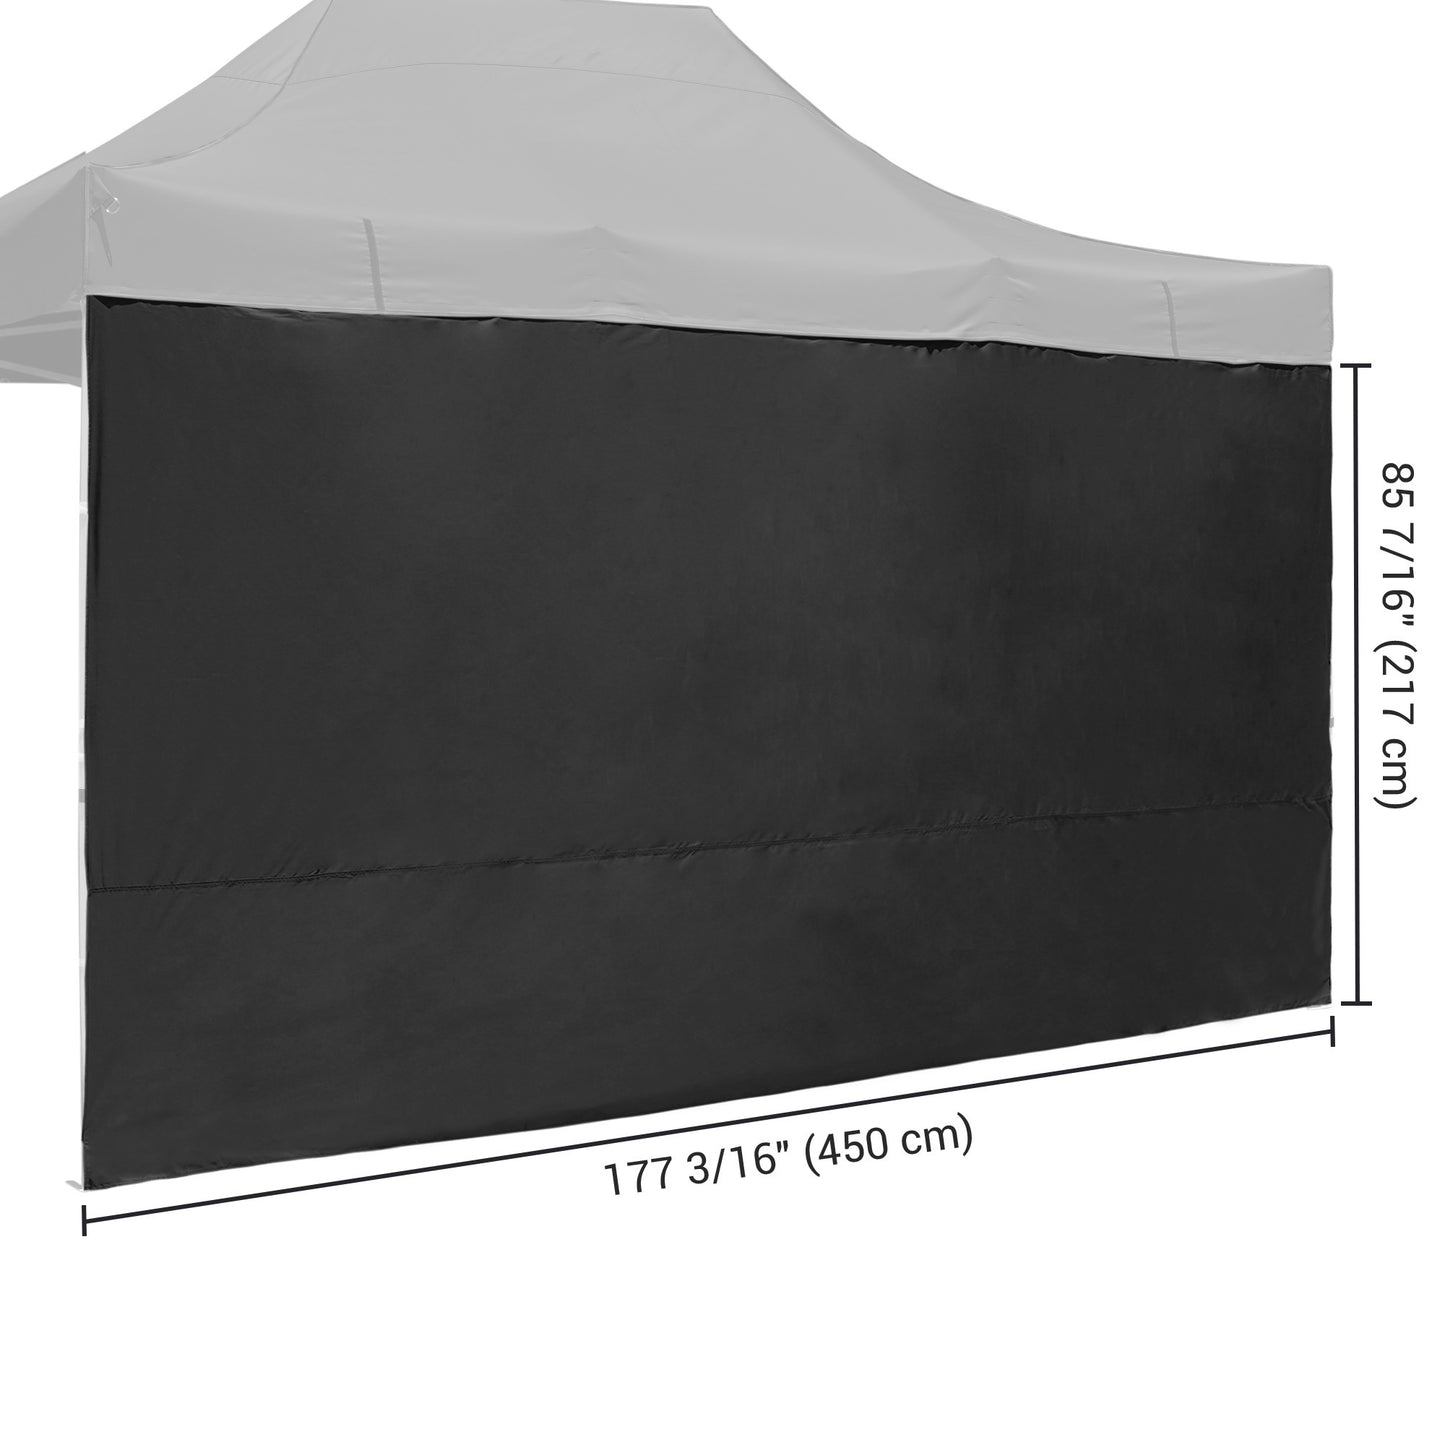 10x15ft Canopy CPAI-84 Sidewall